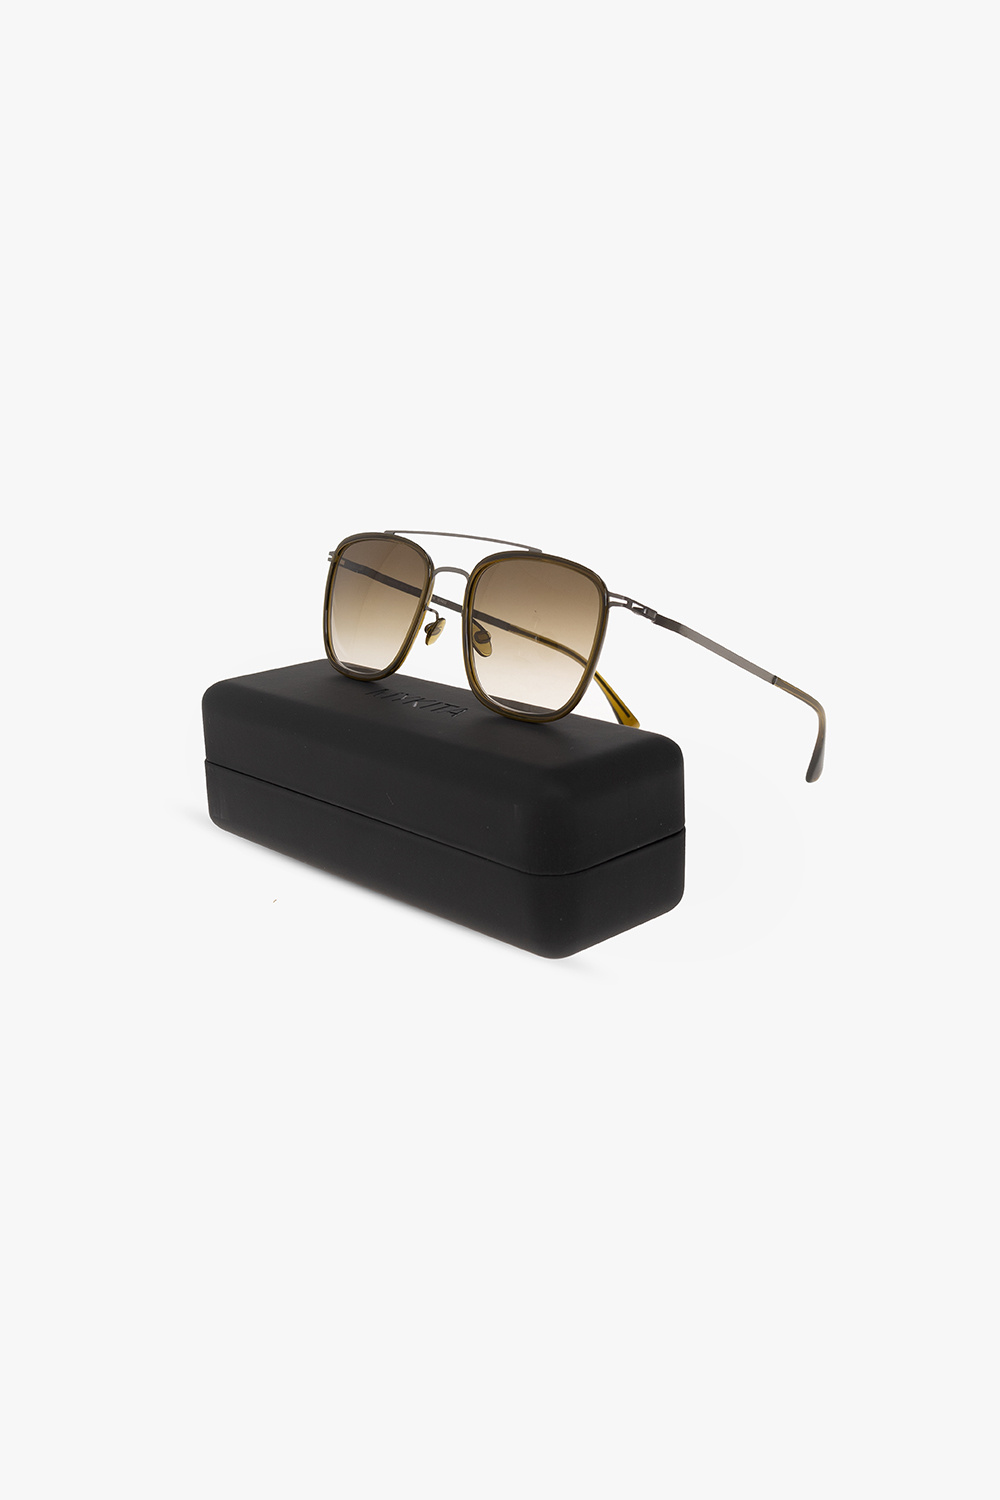 Mykita ‘Jeppe’ two sunglasses